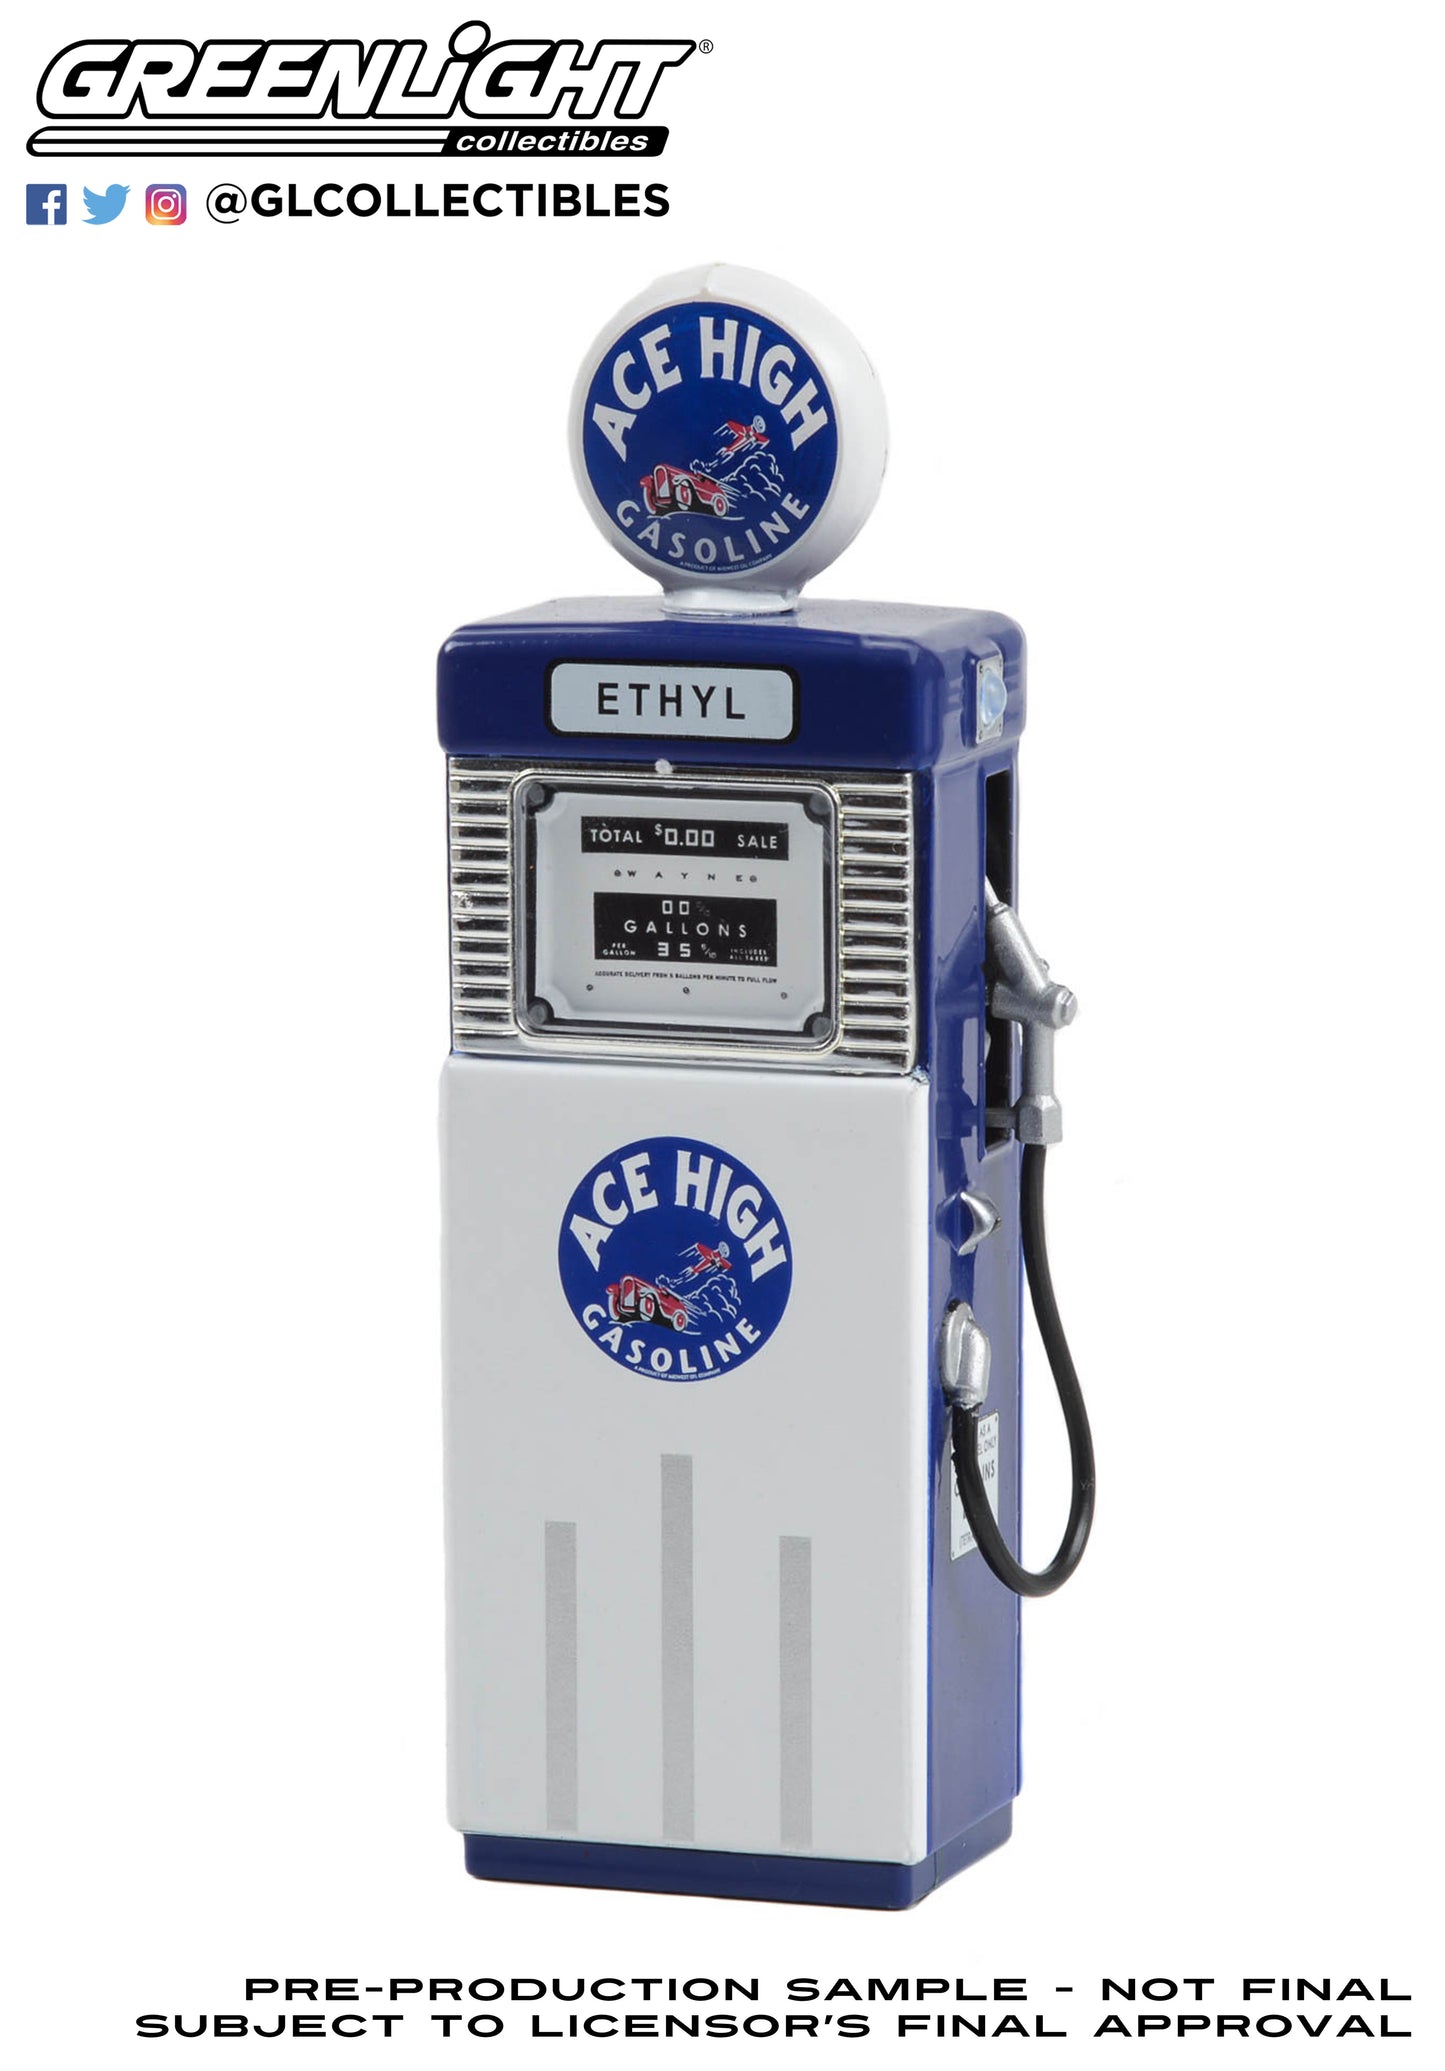 GreenLight 1:18 Vintage Gas Pumps Series 14 - 1951 Wayne 505 Gas Pump Ace High Gasoline 14140-B